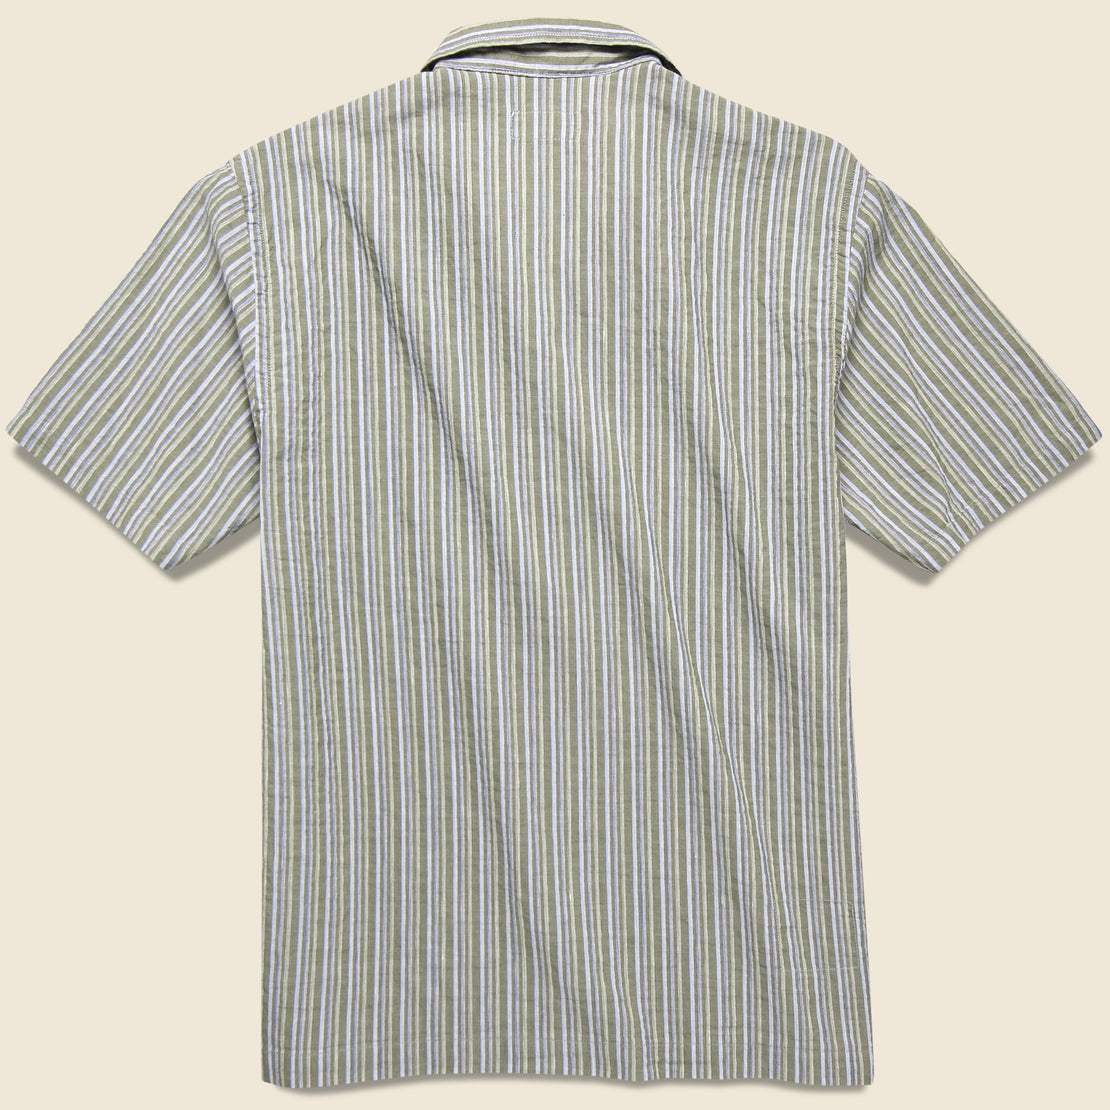 Road Shirt - Olive Elton 2 Stripe